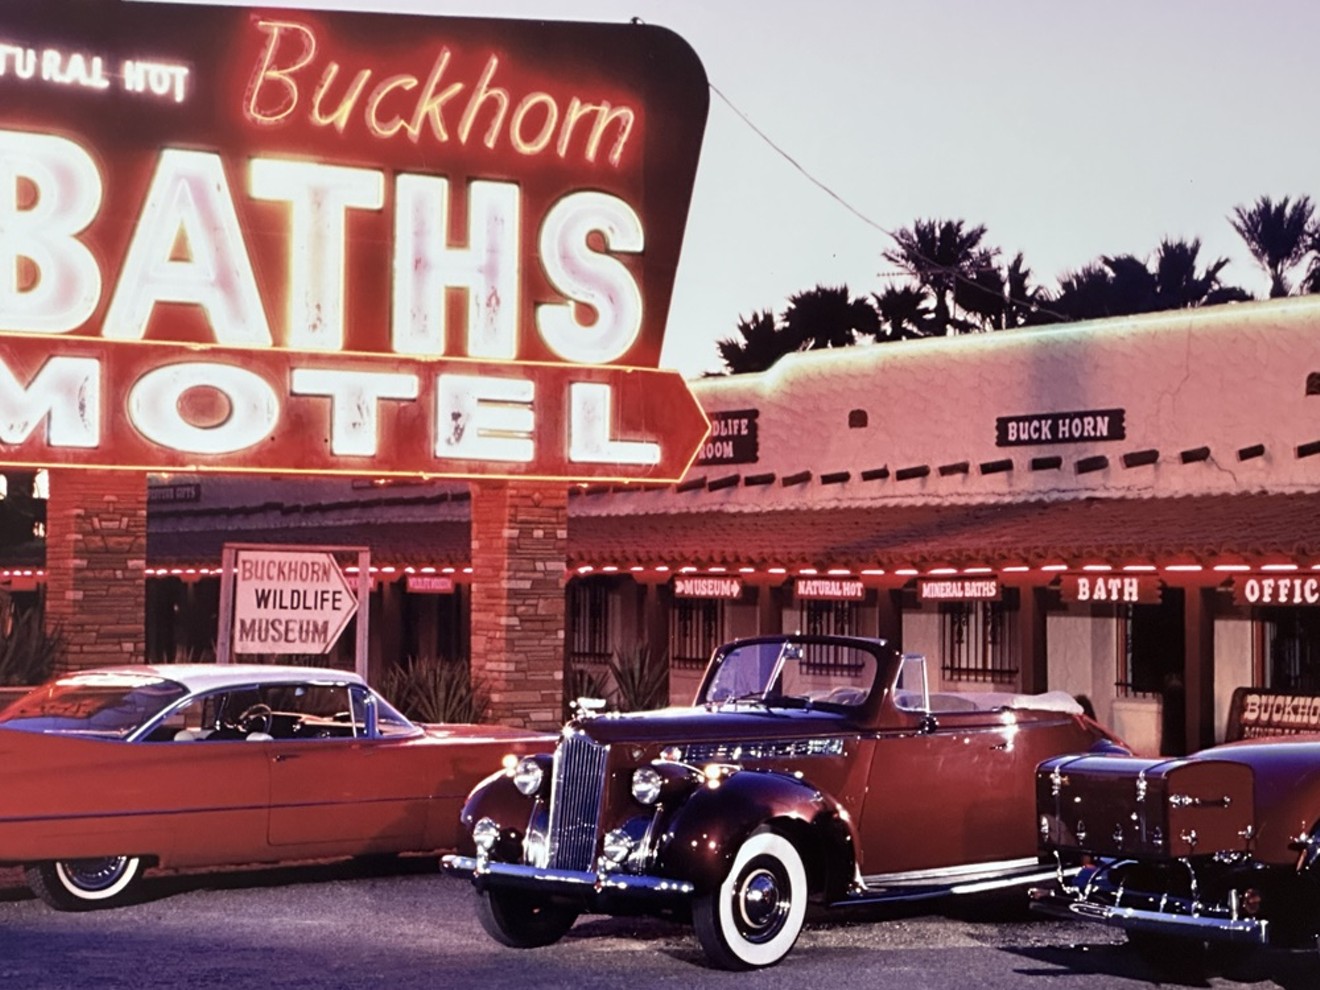 The Buckhorn Baths Motel was a popular midcentury tourist destination.